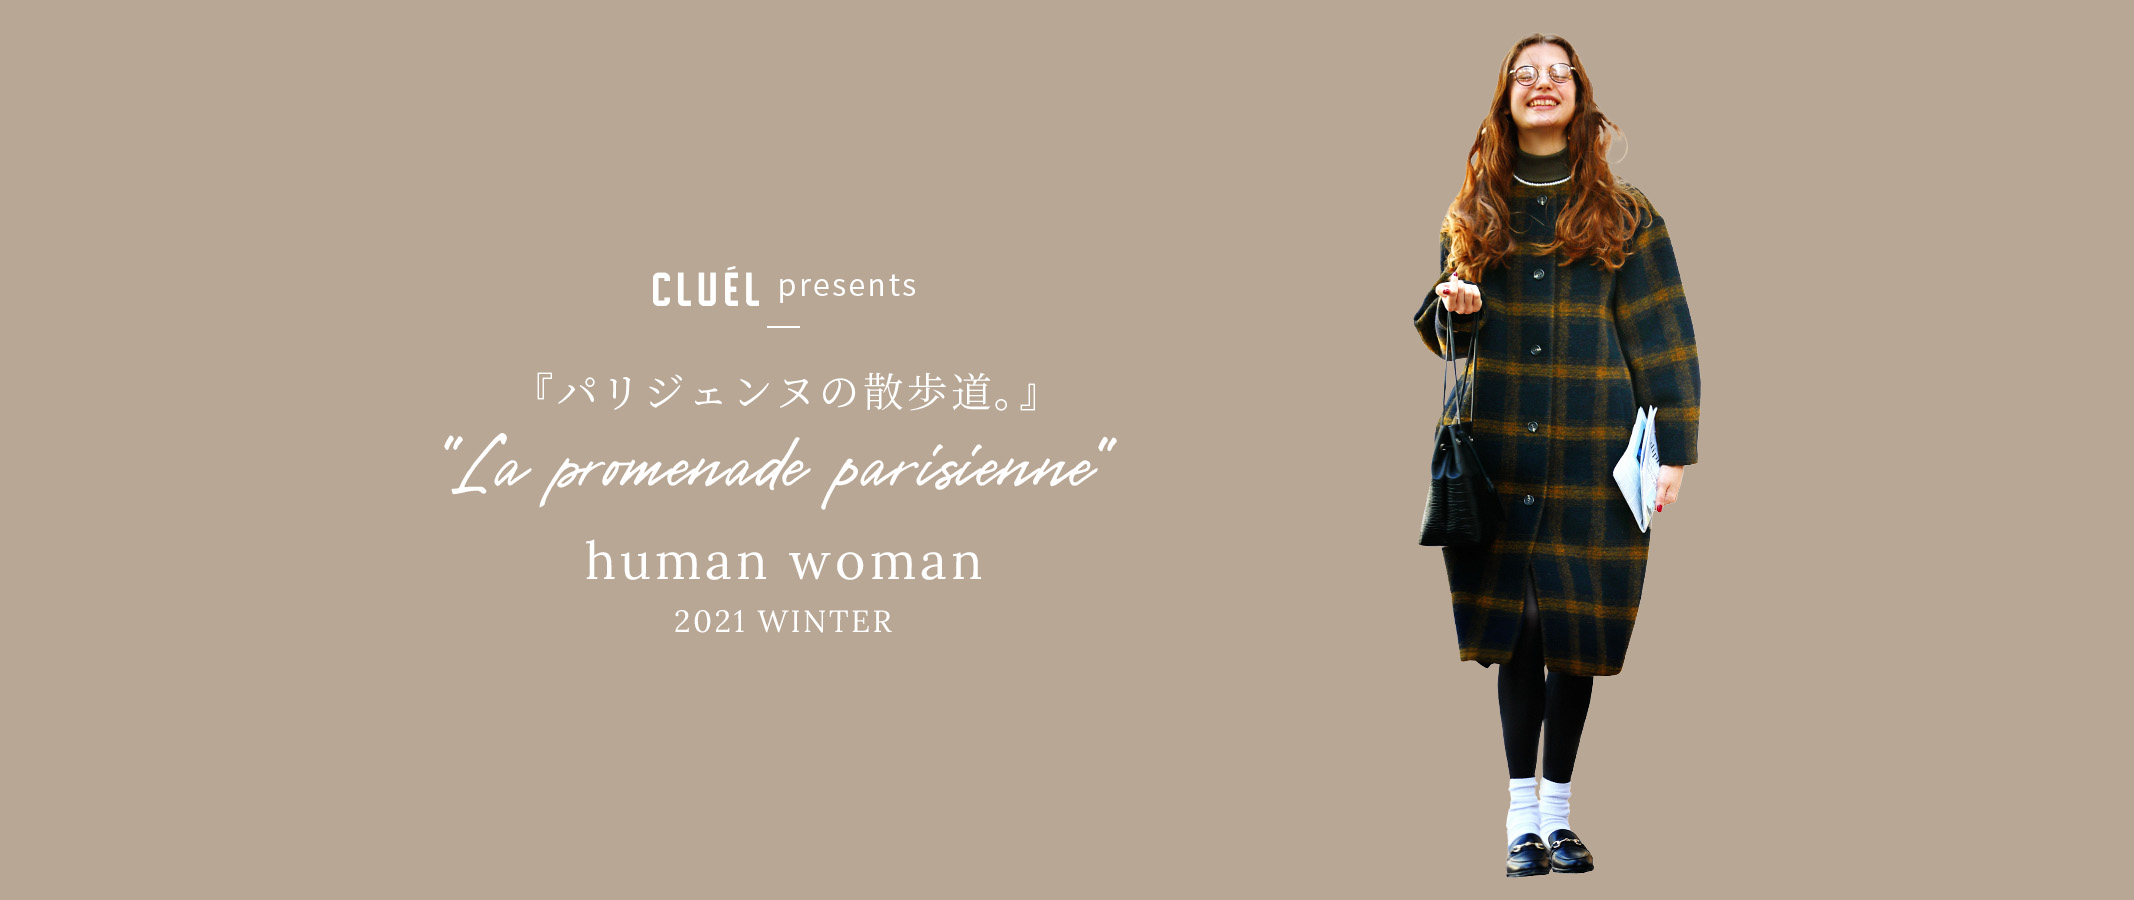 human woman 2021 WINTER - CLUÉL presents パリジェンヌの散歩道。 